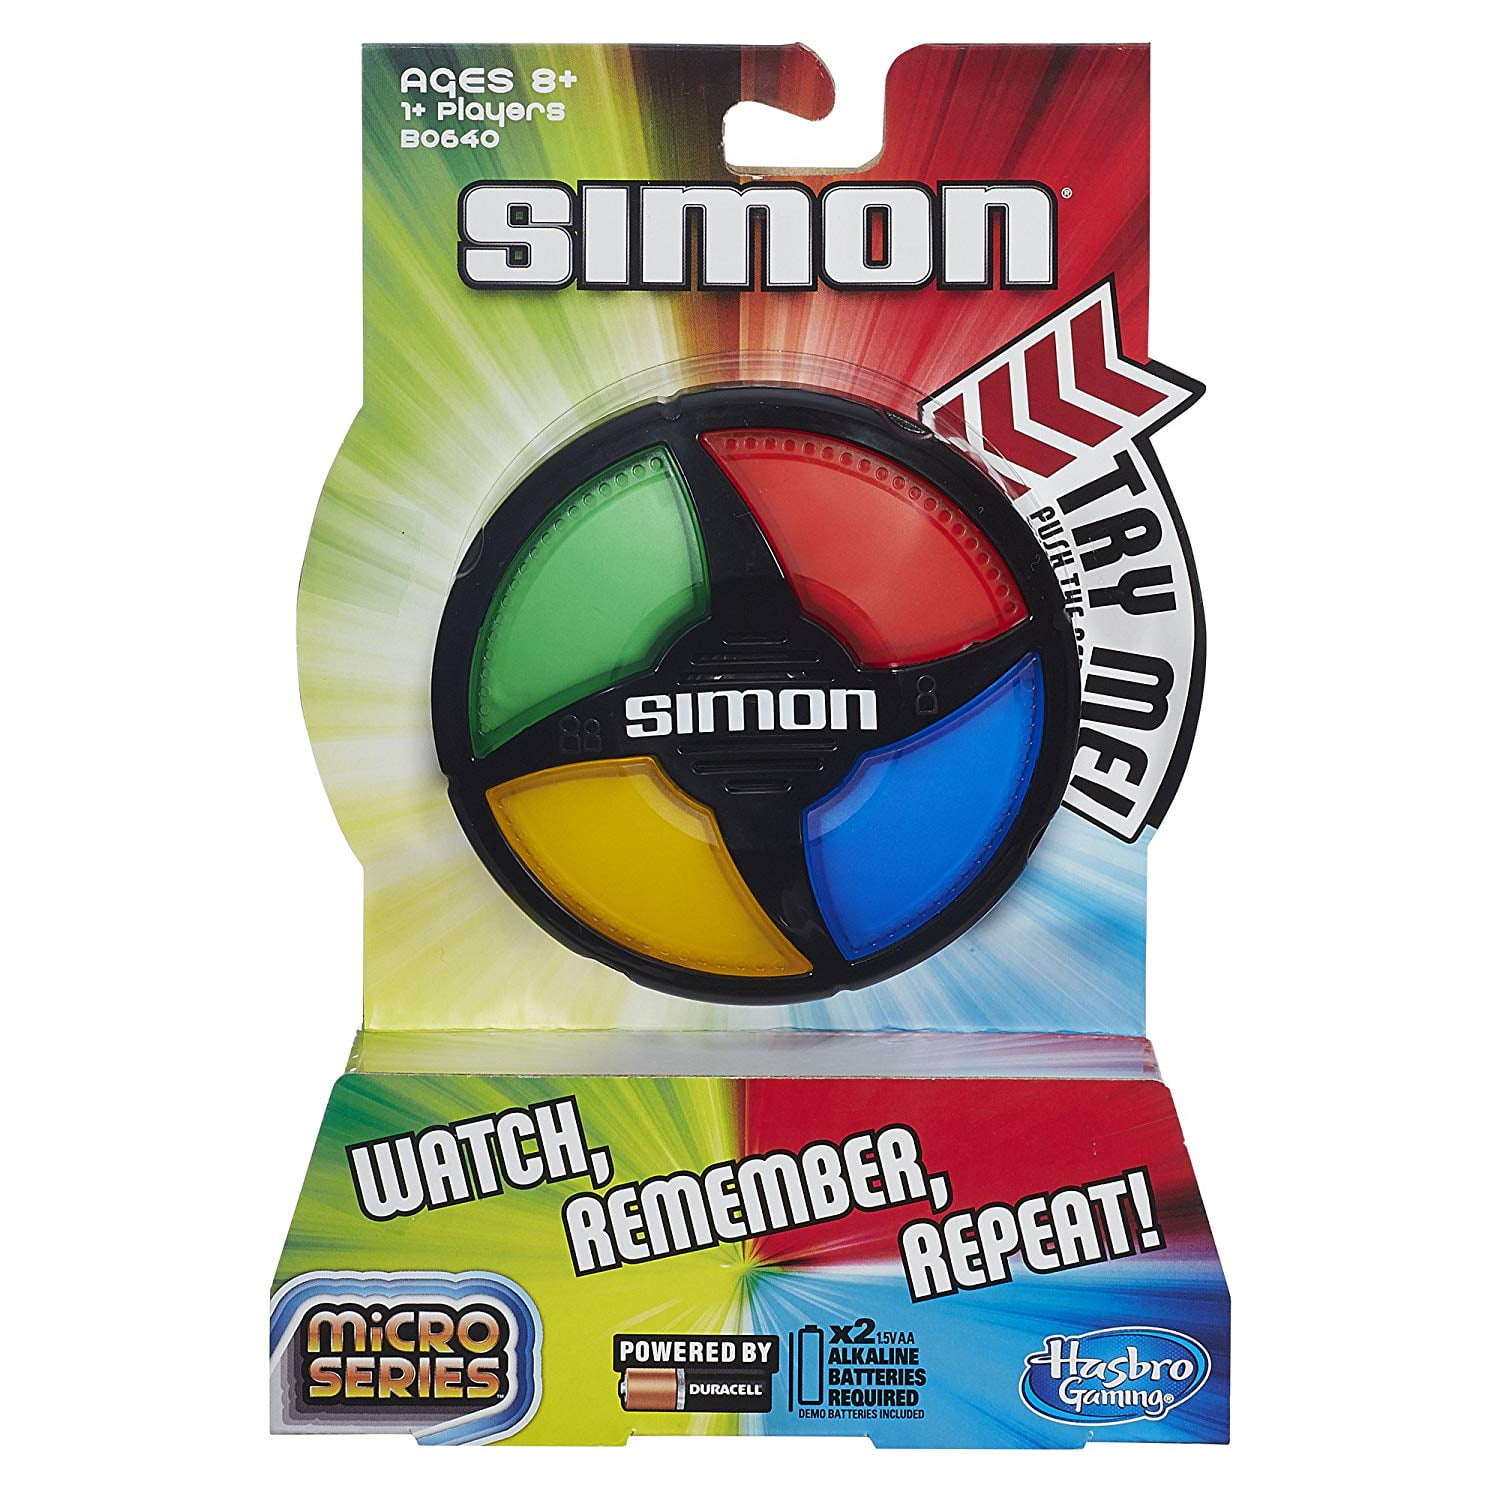 "SIMON" Micro Series 3.5" Mini Electronic Handheld Game by Hasbro 